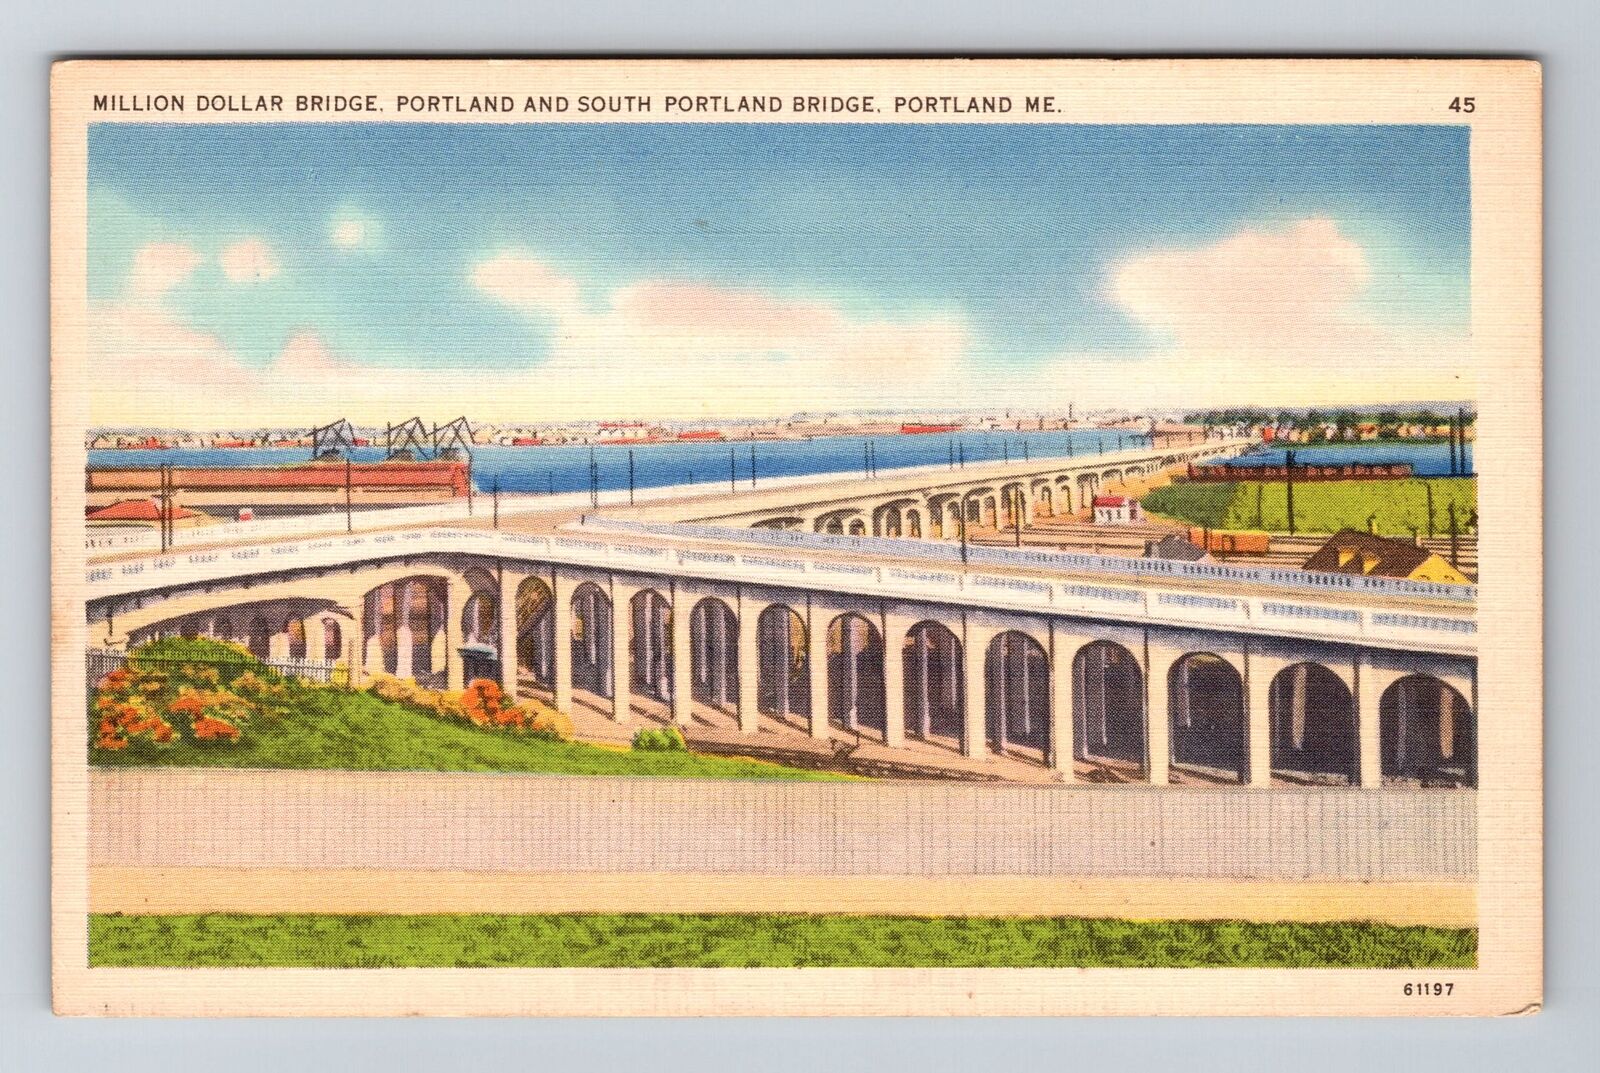 Portland ME-Maine, Million Dollar Bridge Vintage Souvenir Postcard